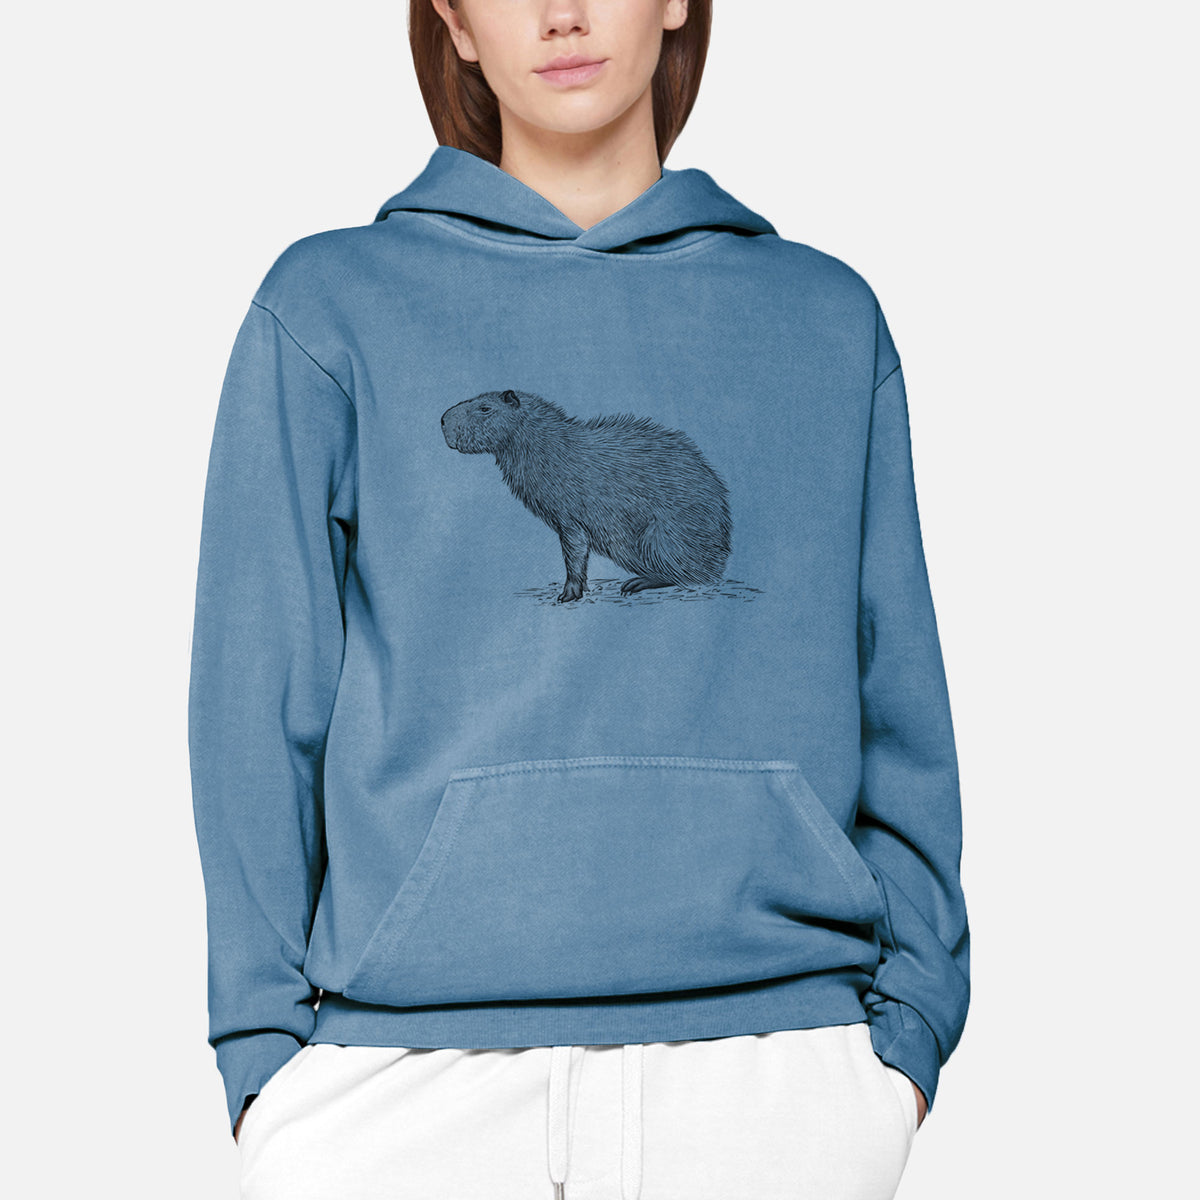 Capybara Profile - Hydrochoerus hydrochaeris  - Urban Heavyweight Hoodie